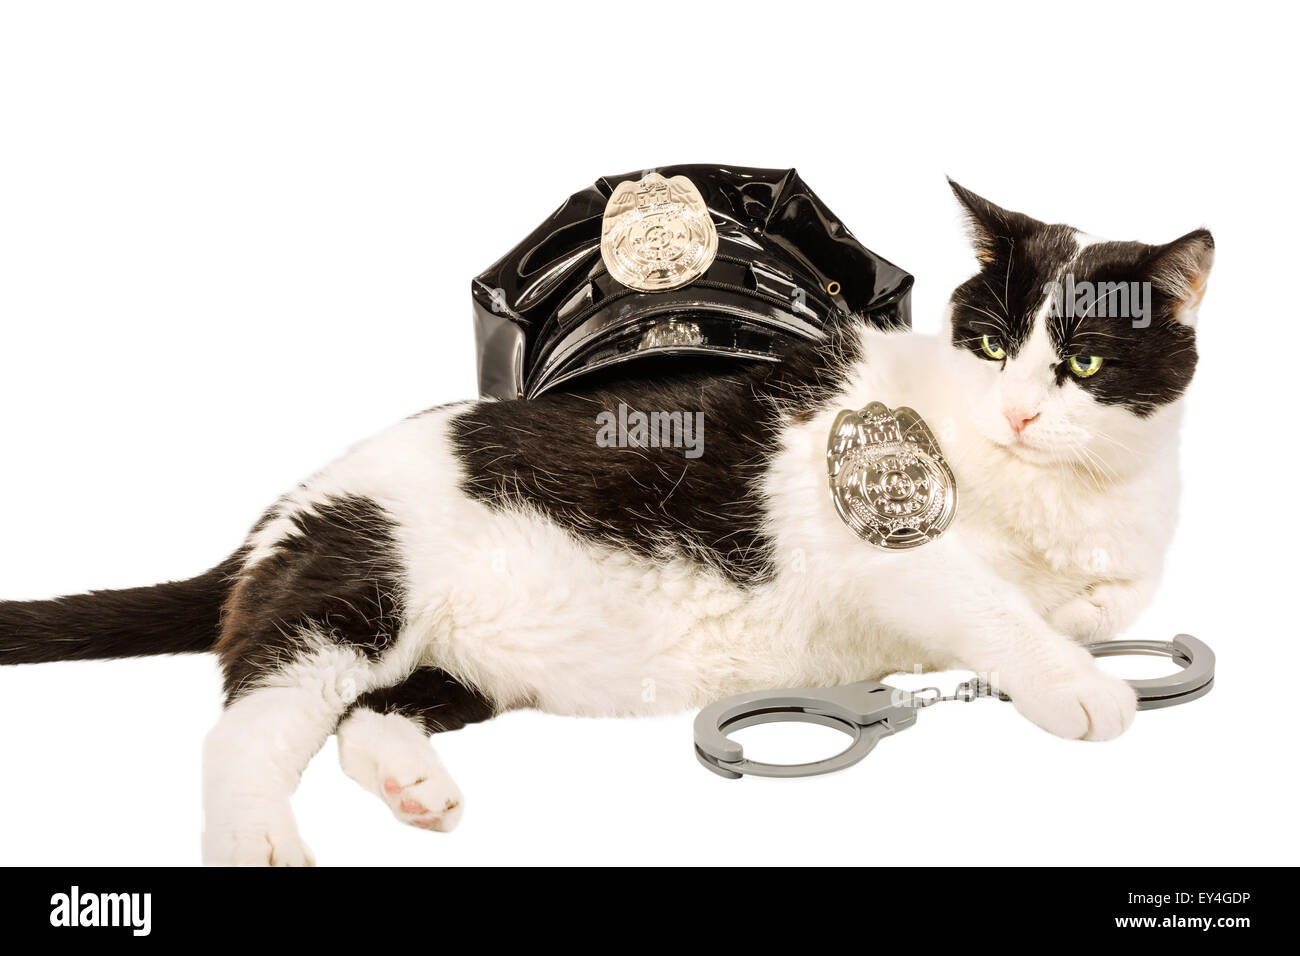 Police cat Stock Photo